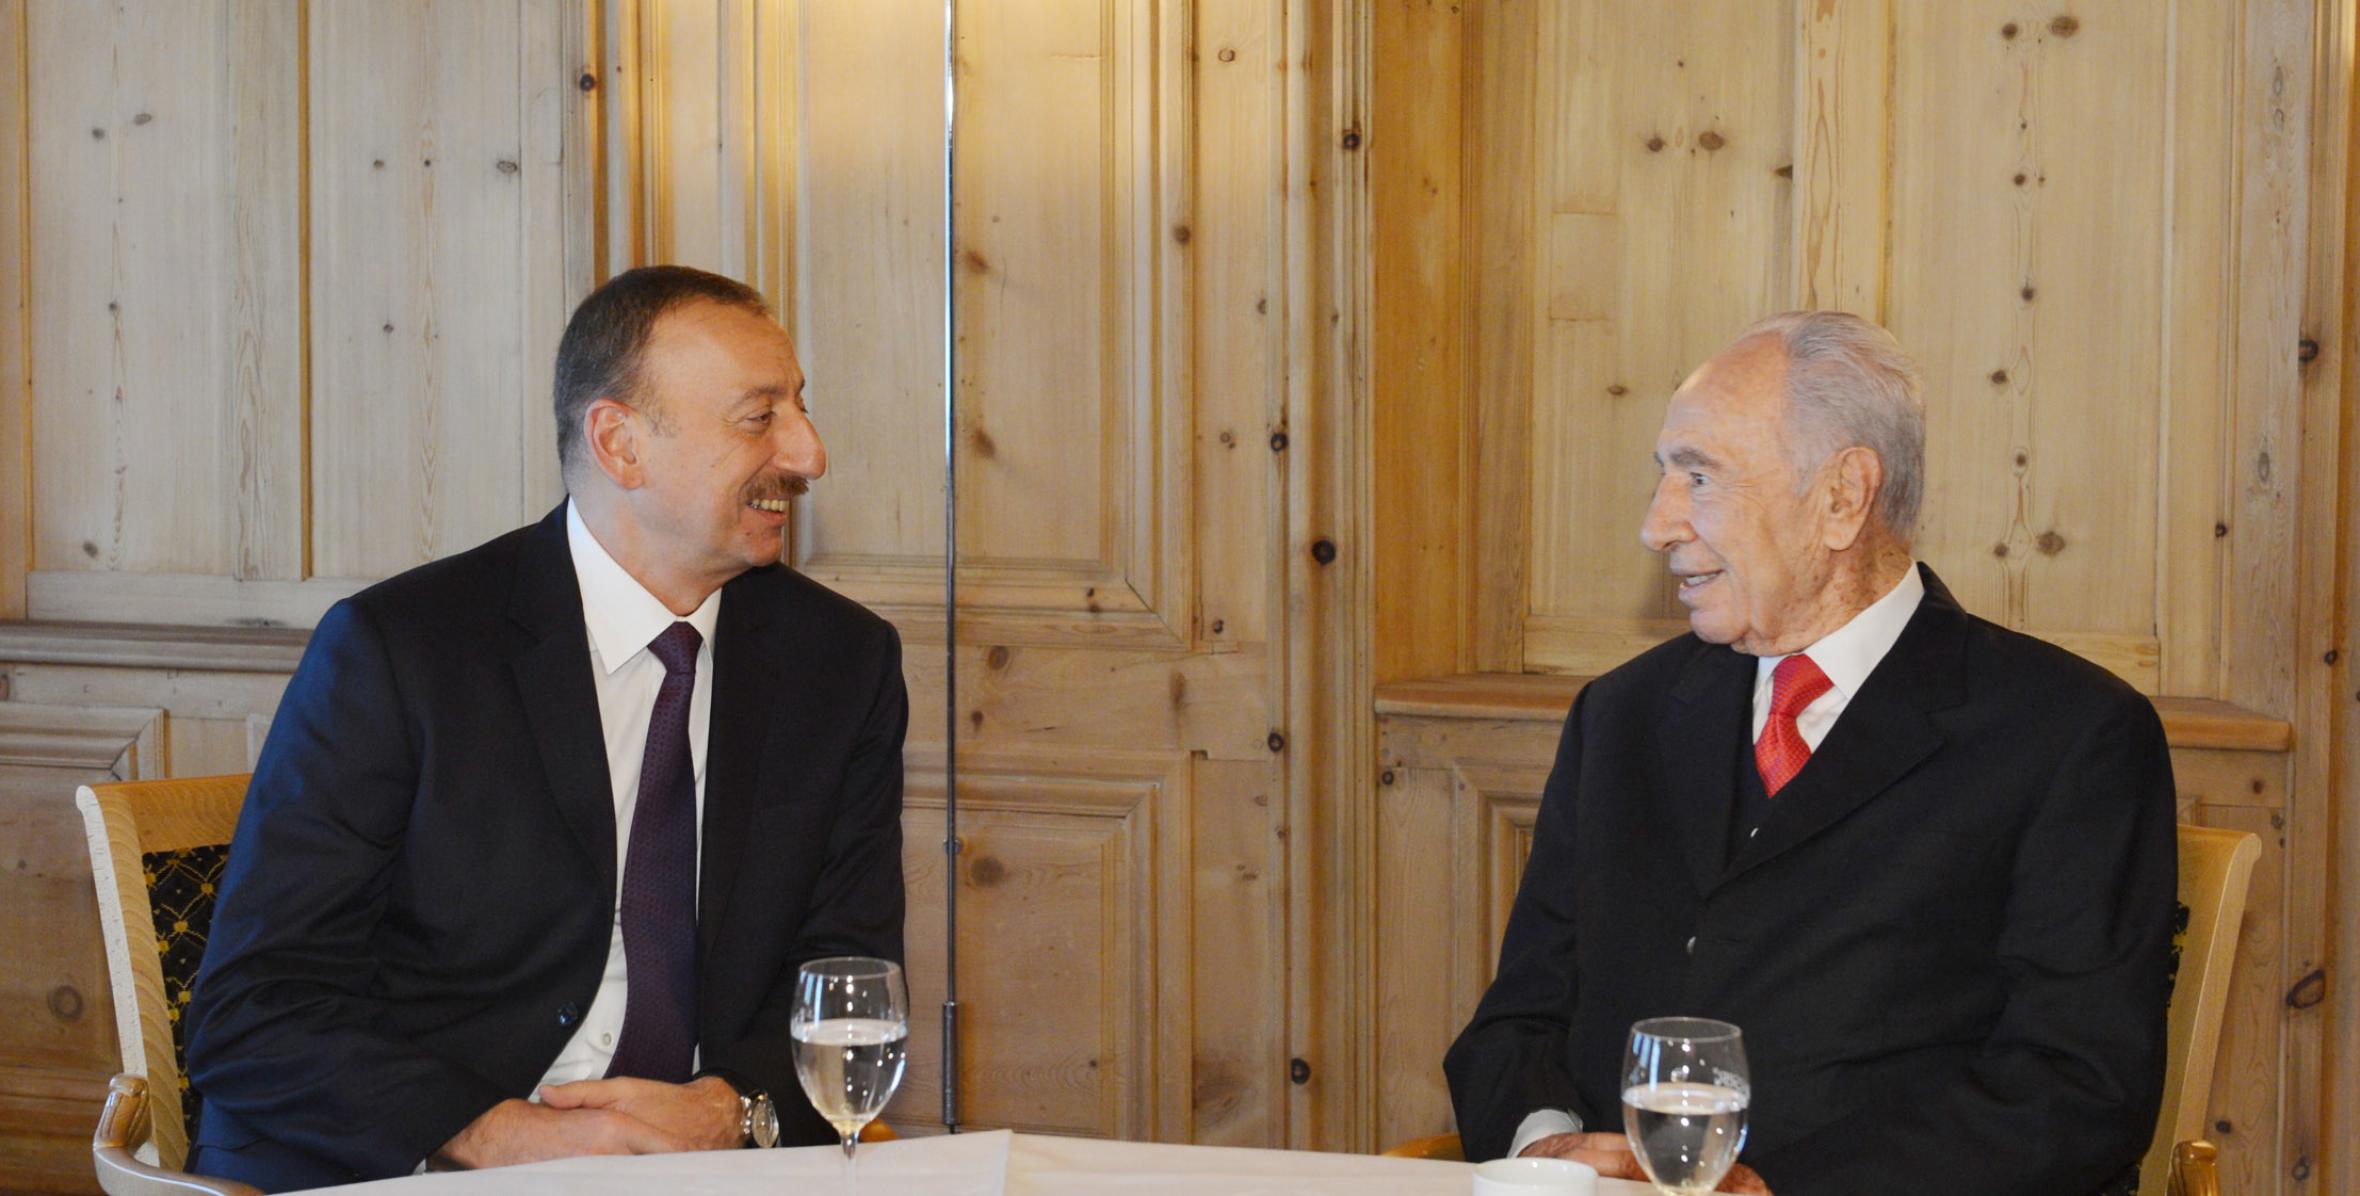 Ilham Aliyev met with Israeli President Shimon Peres in Davos